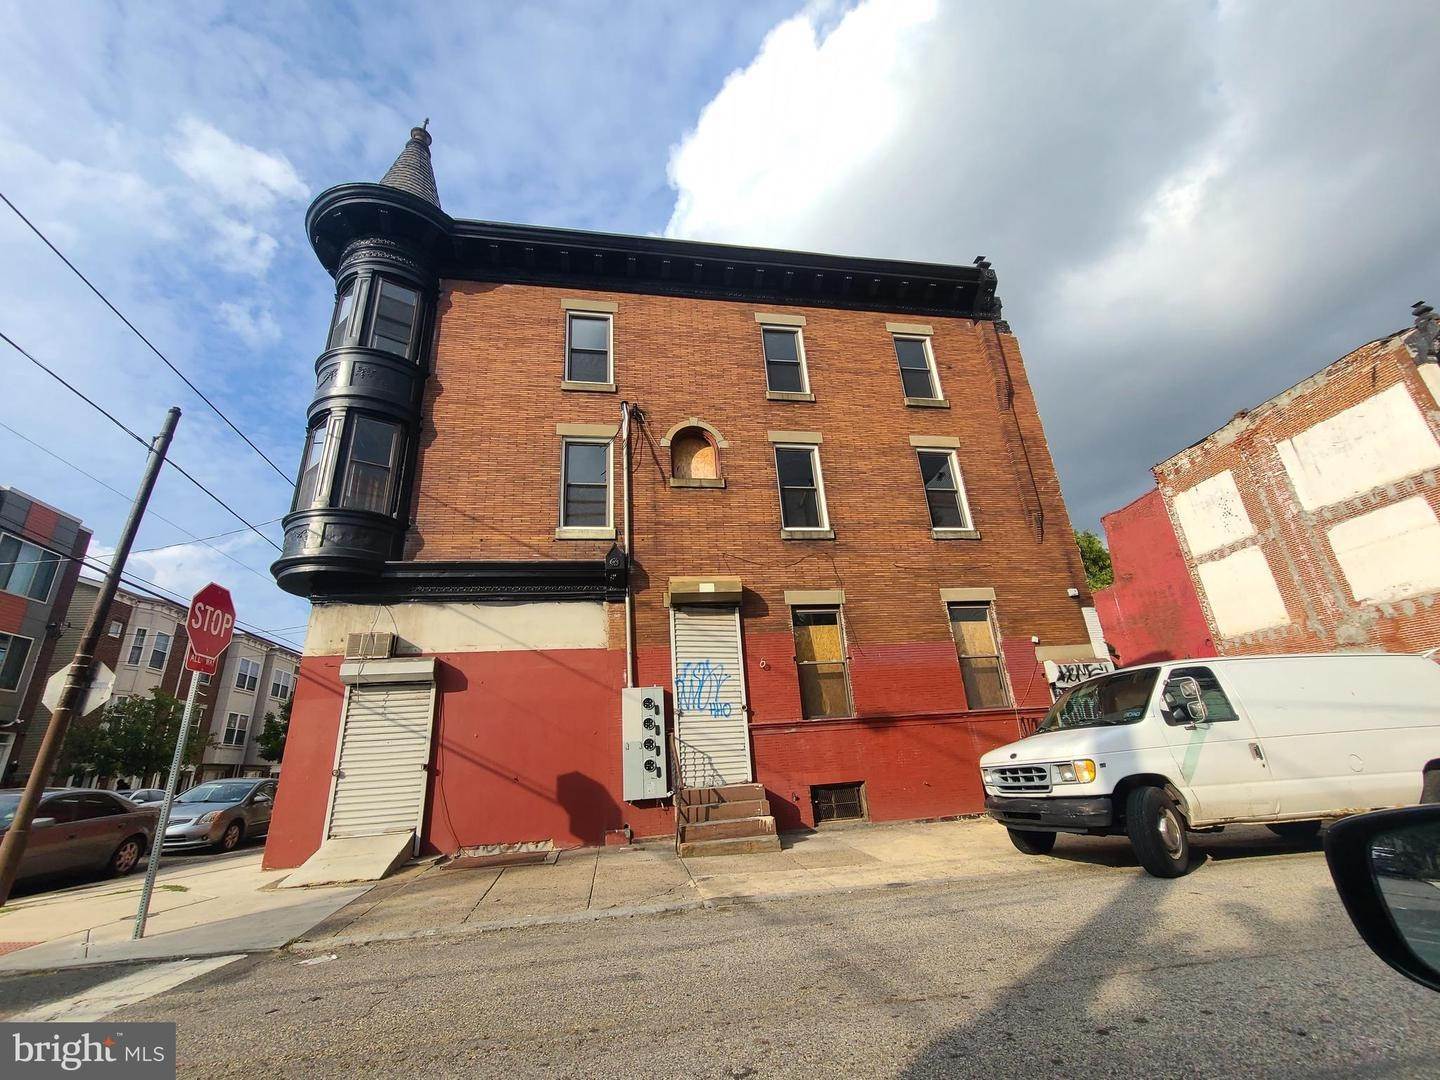 1. Multi Family for Sale at 1601 N 6TH Street Philadelphia, Pennsylvania 19122 United States